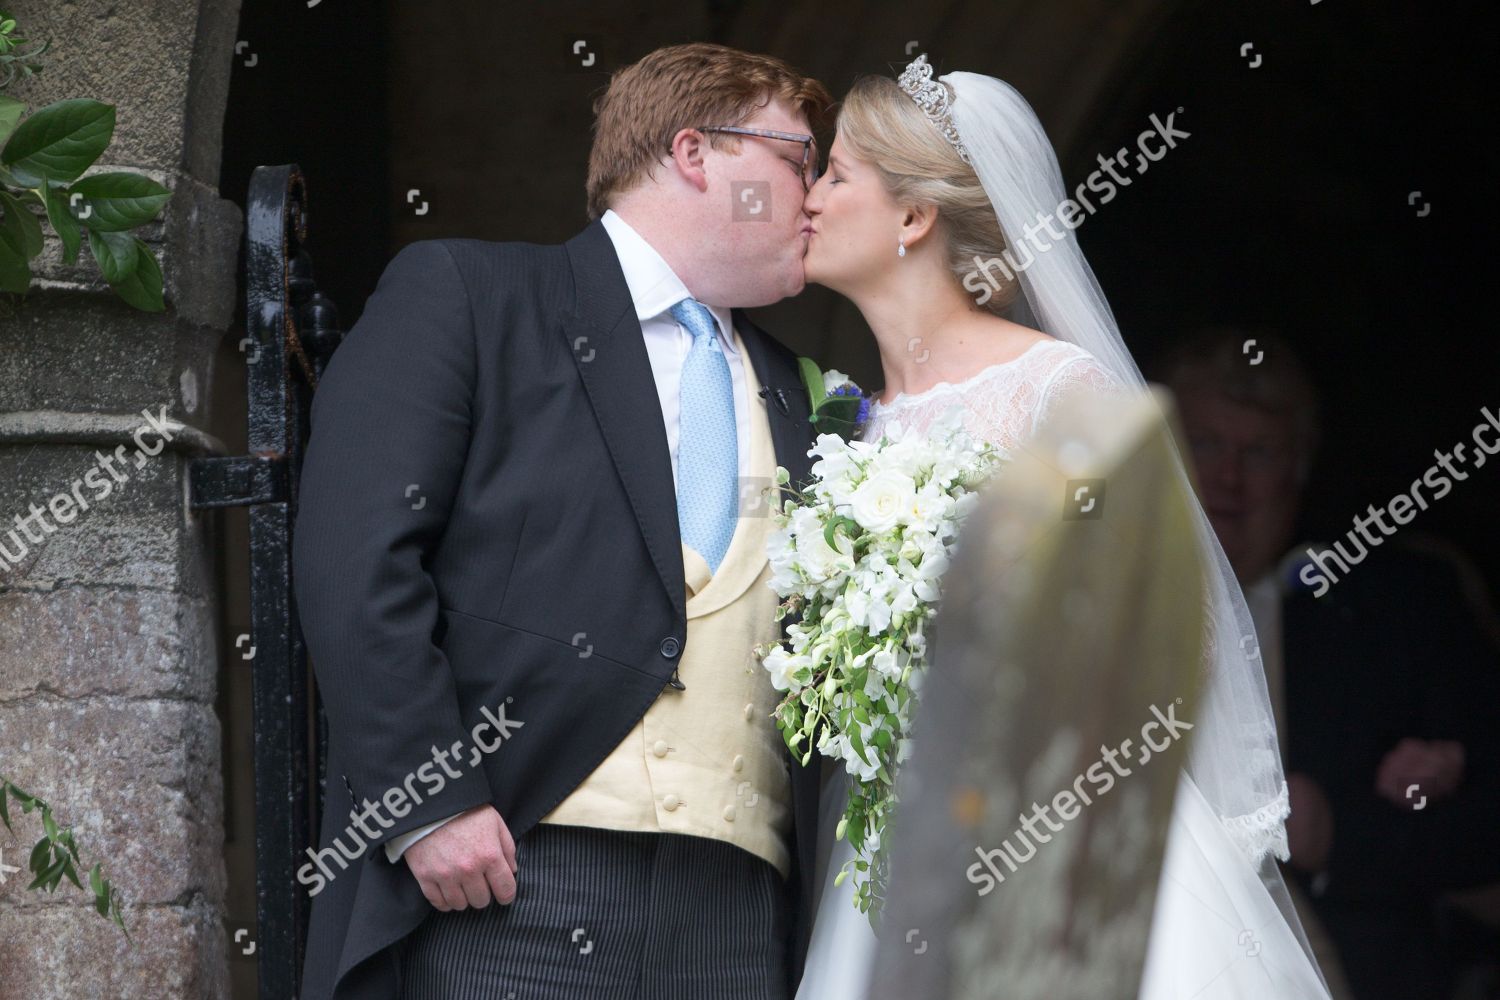 wedding-of-celia-mccorquodale-and-george-woodhouse-stoke-rochford-uk-shutterstock-editorial-9718711ap.jpg